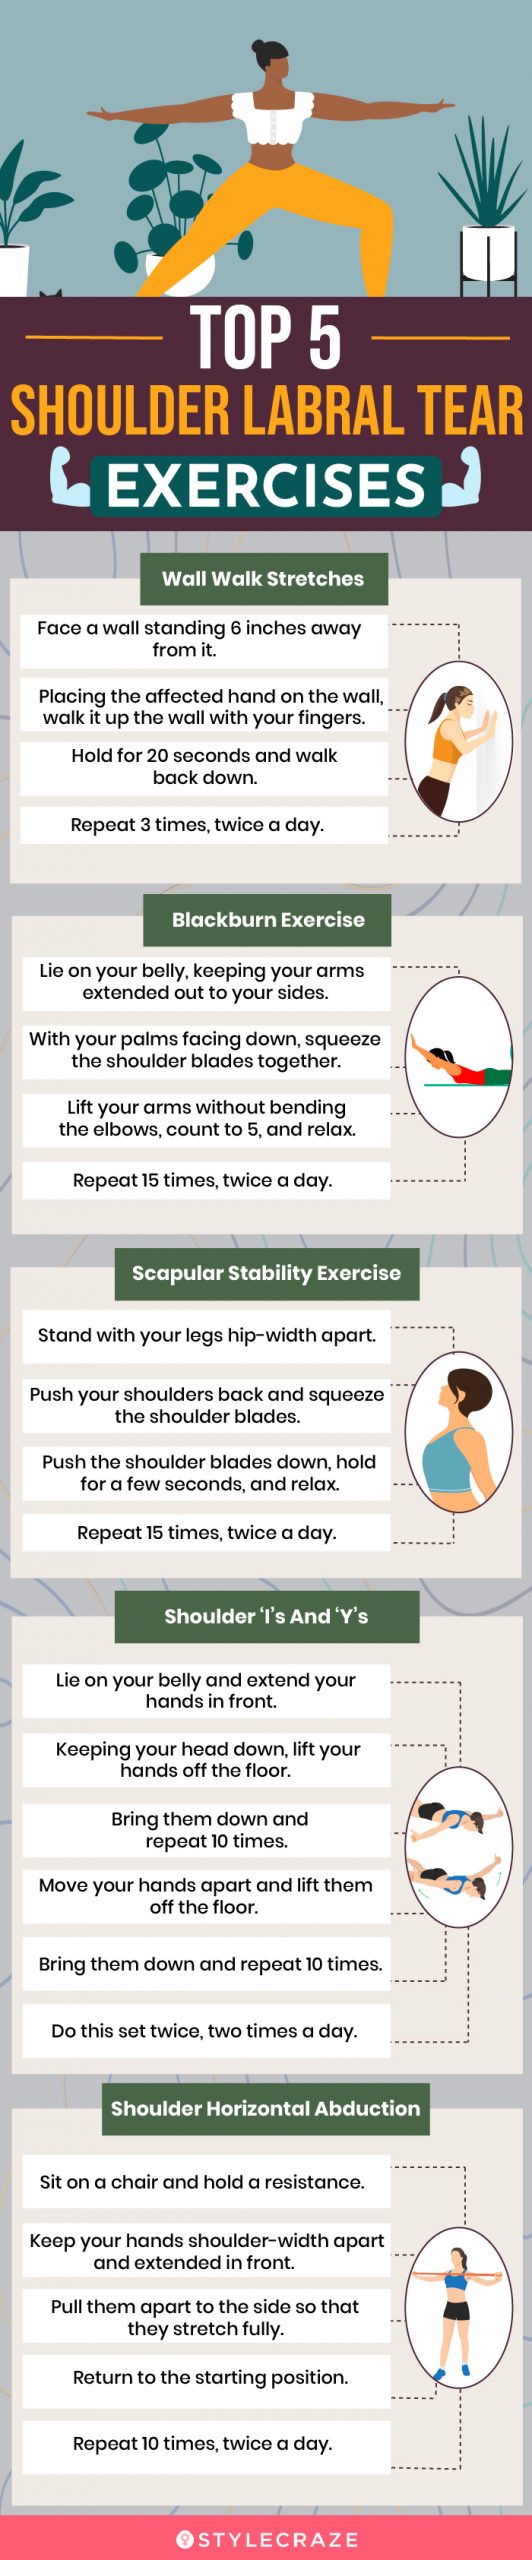 top 5 shoulder labral tear exercises (infographic)